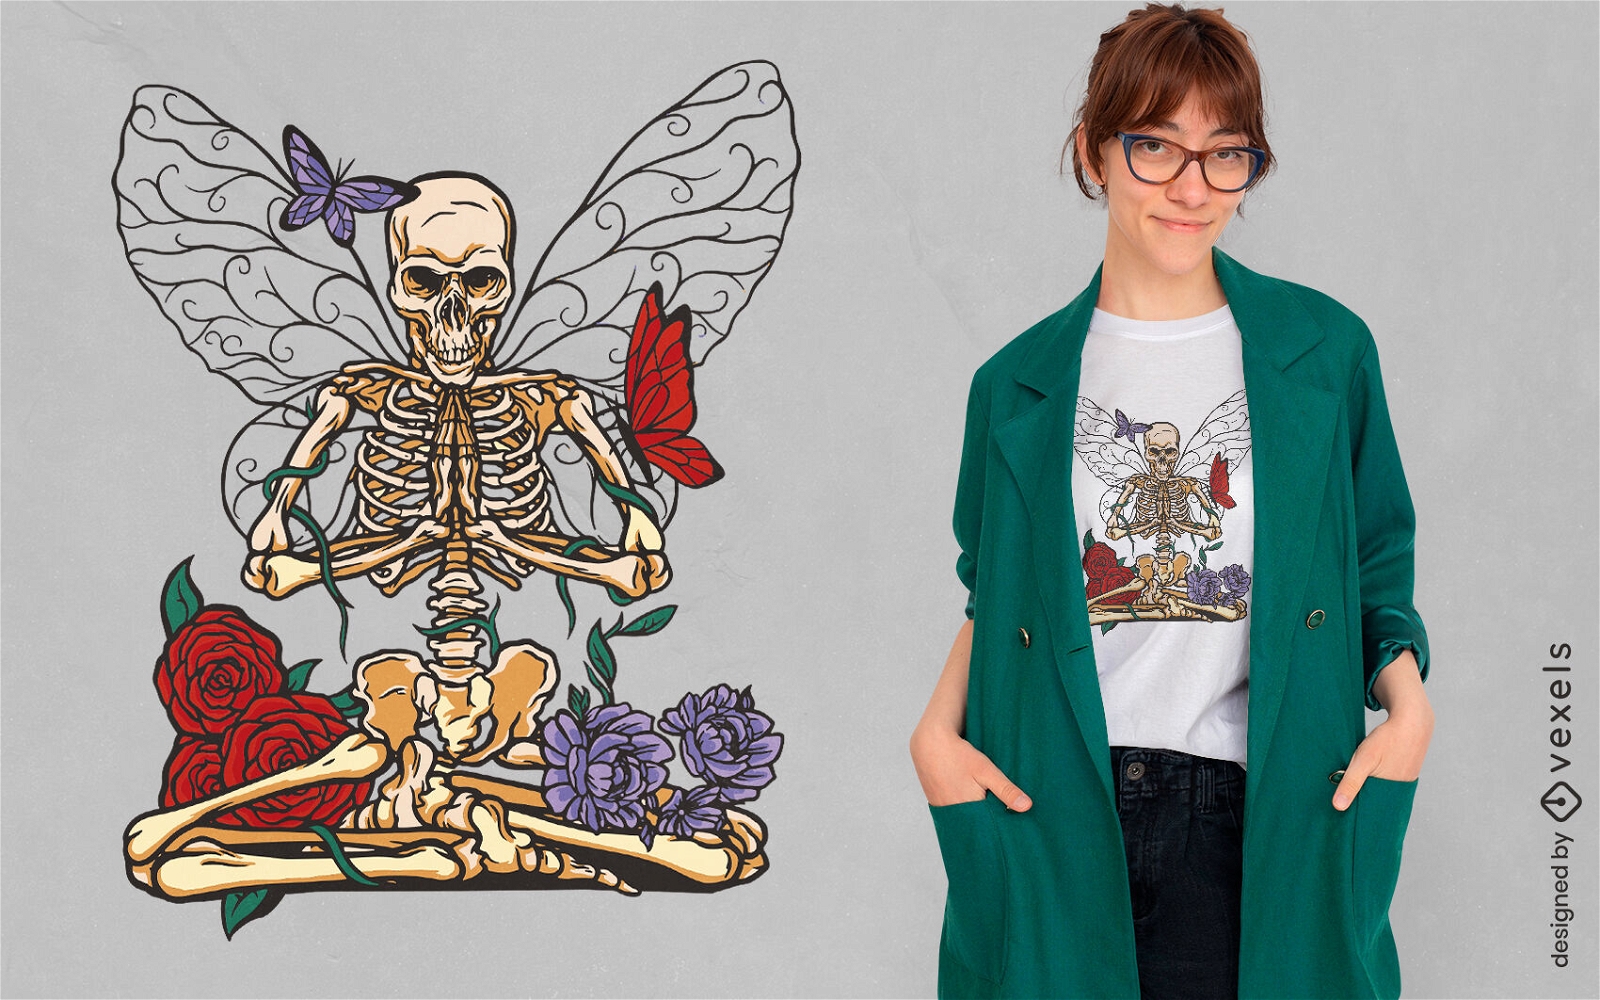 Dise?o de camiseta esqueleto con flores y alas.